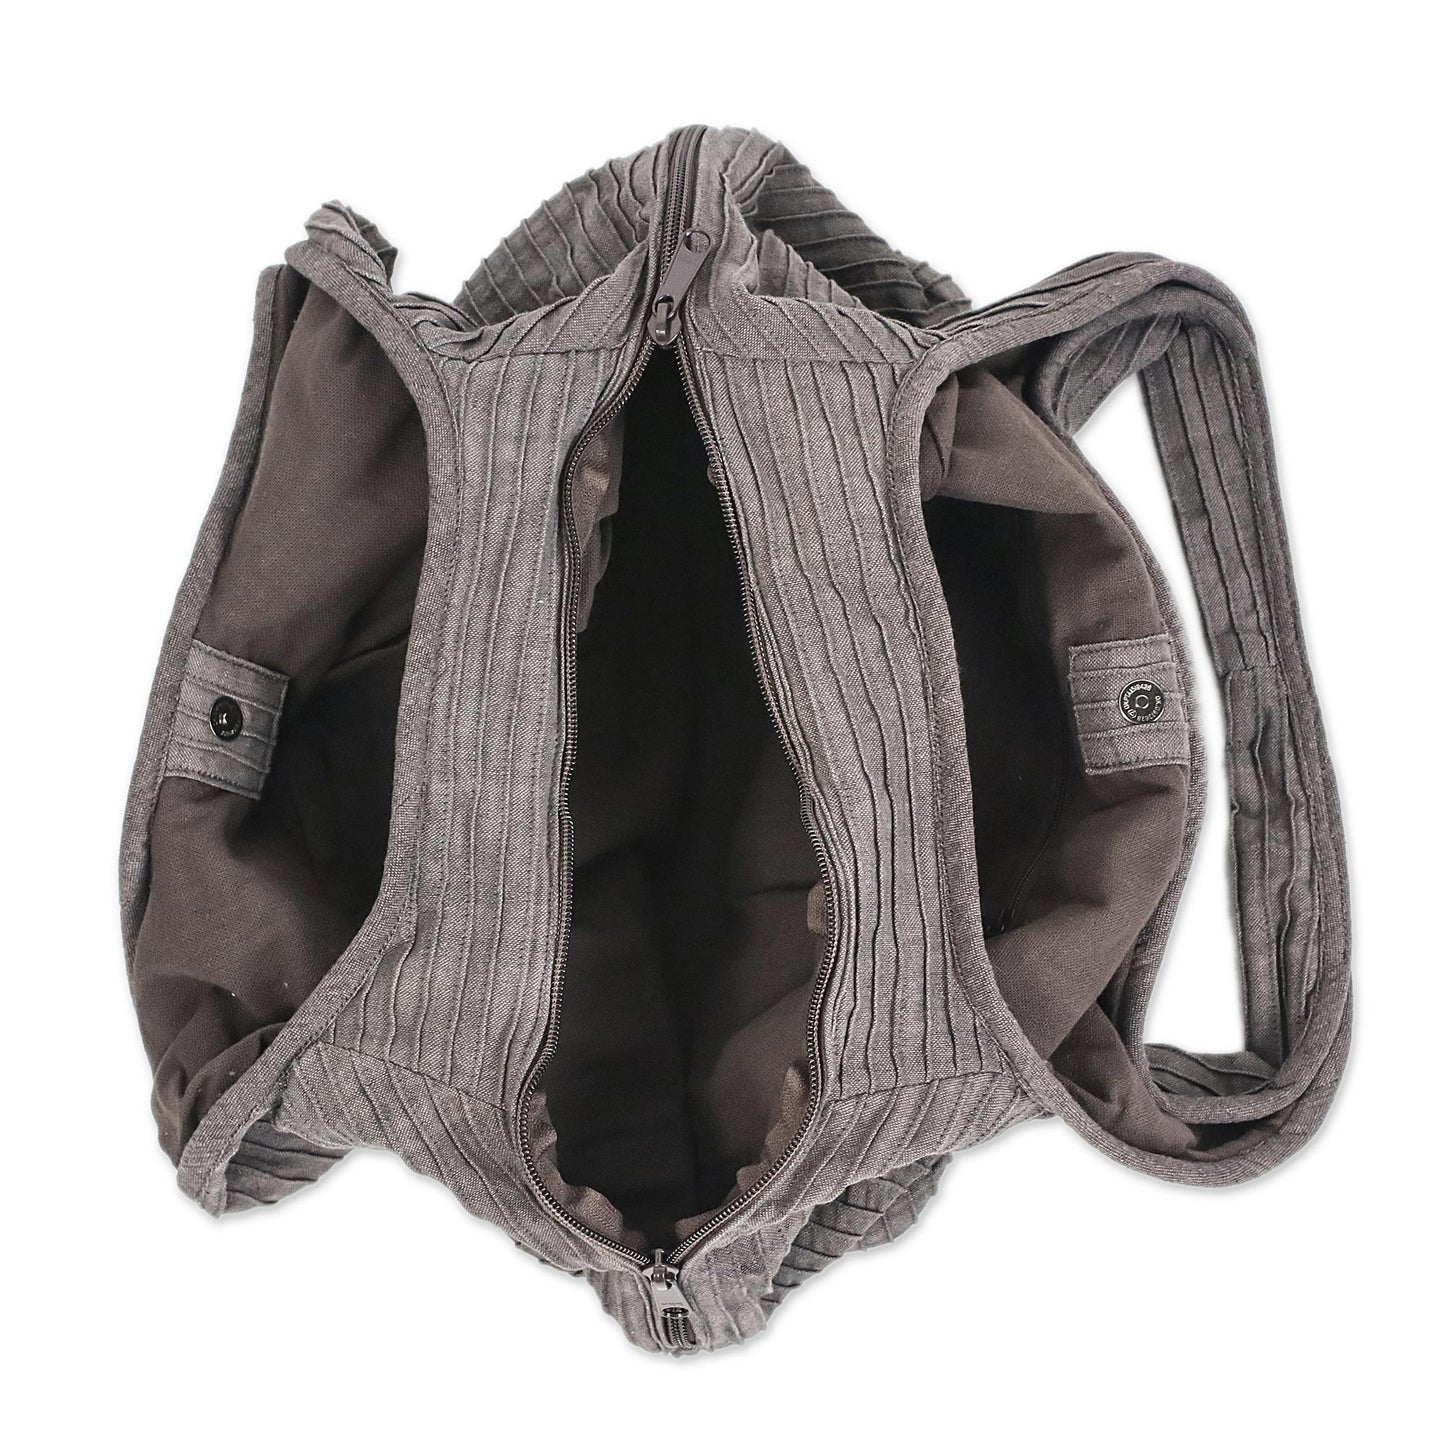 Thai Texture in Grey Cotton Shoulder Bag